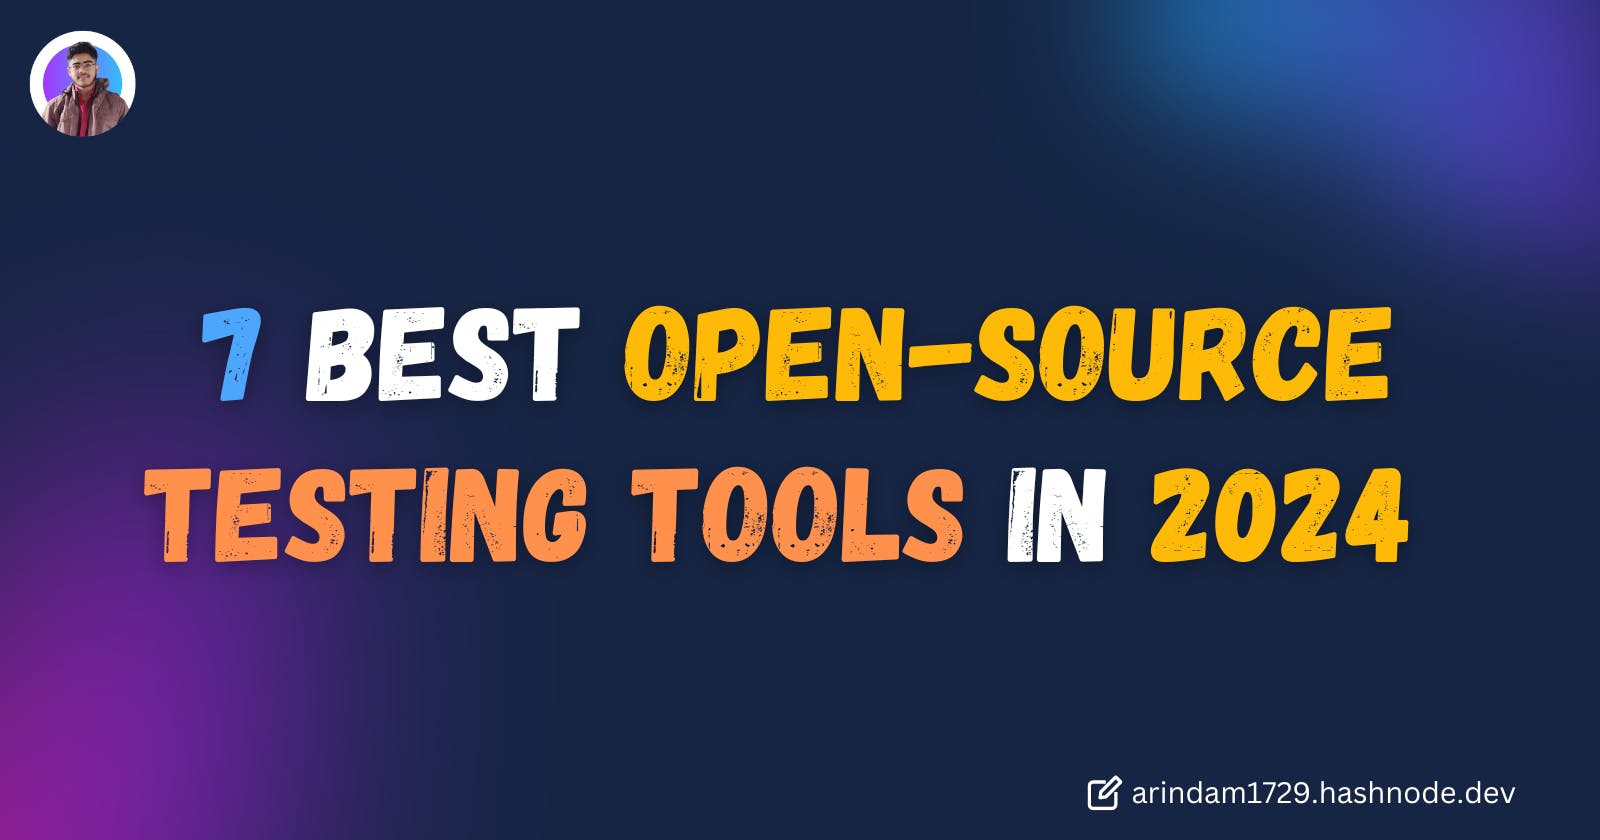 7 Best Open-source Testing Tools in 2024